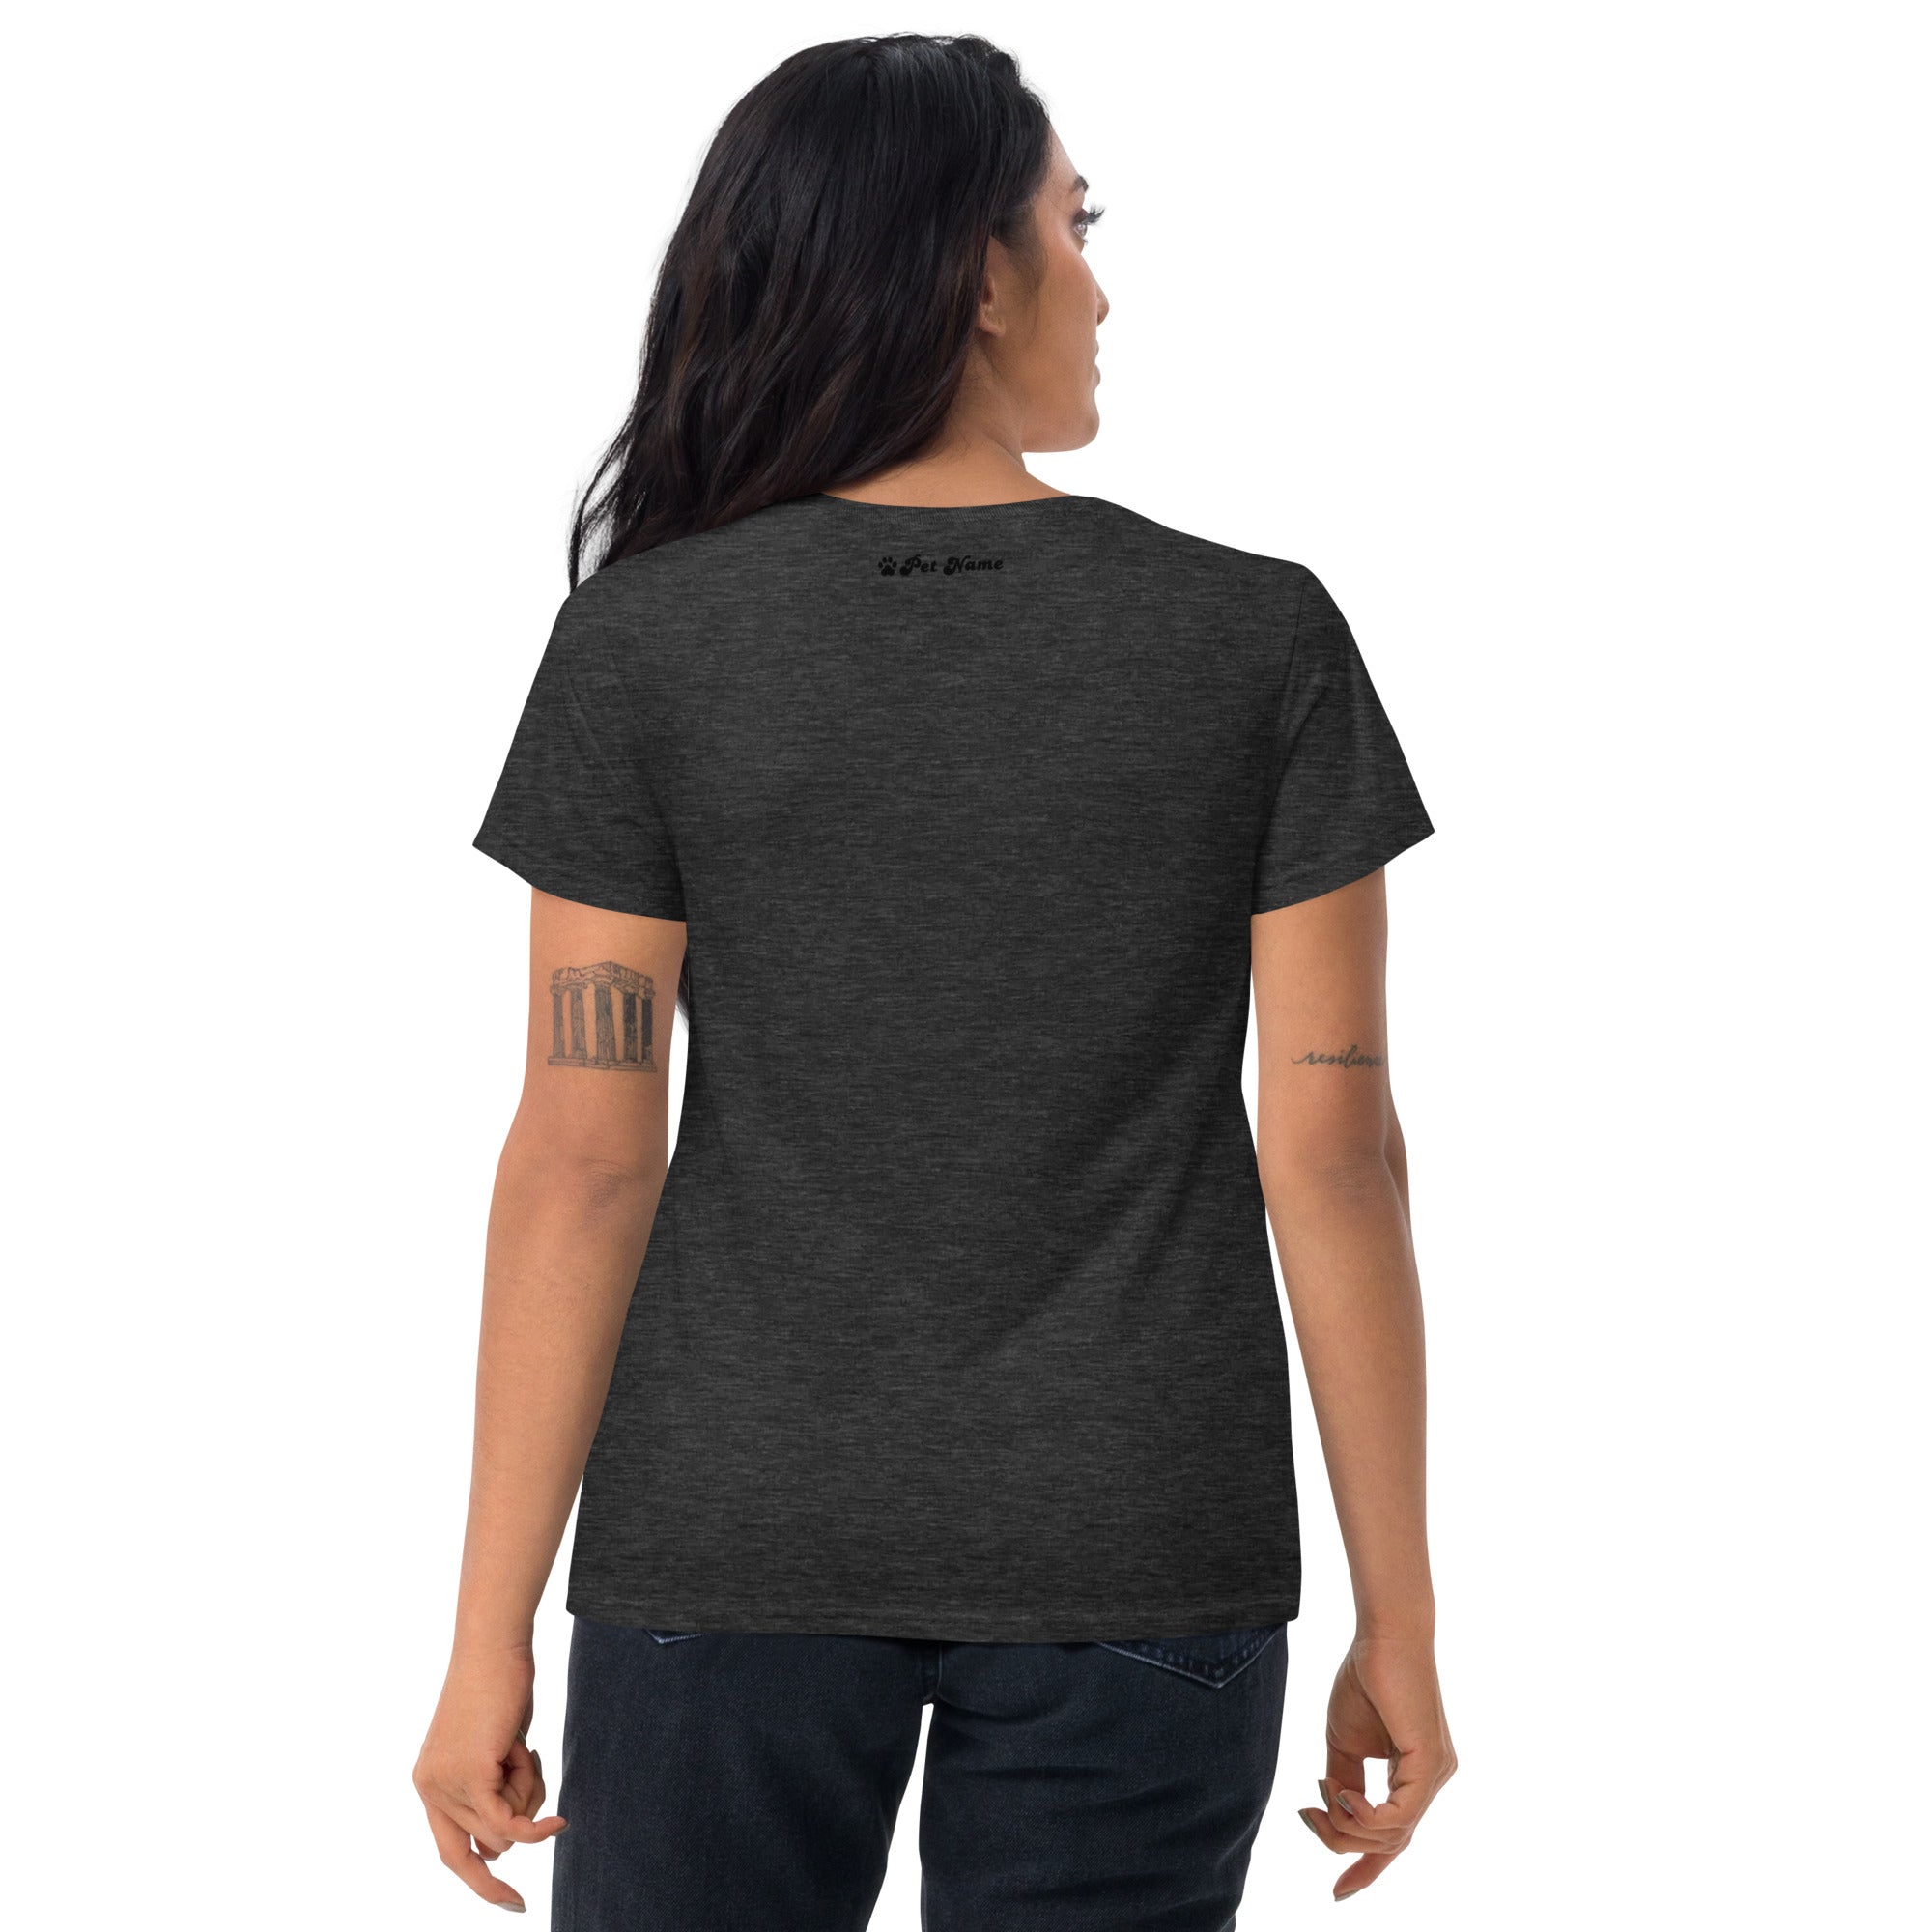 English Foxhound Women's short sleeve t-shirt